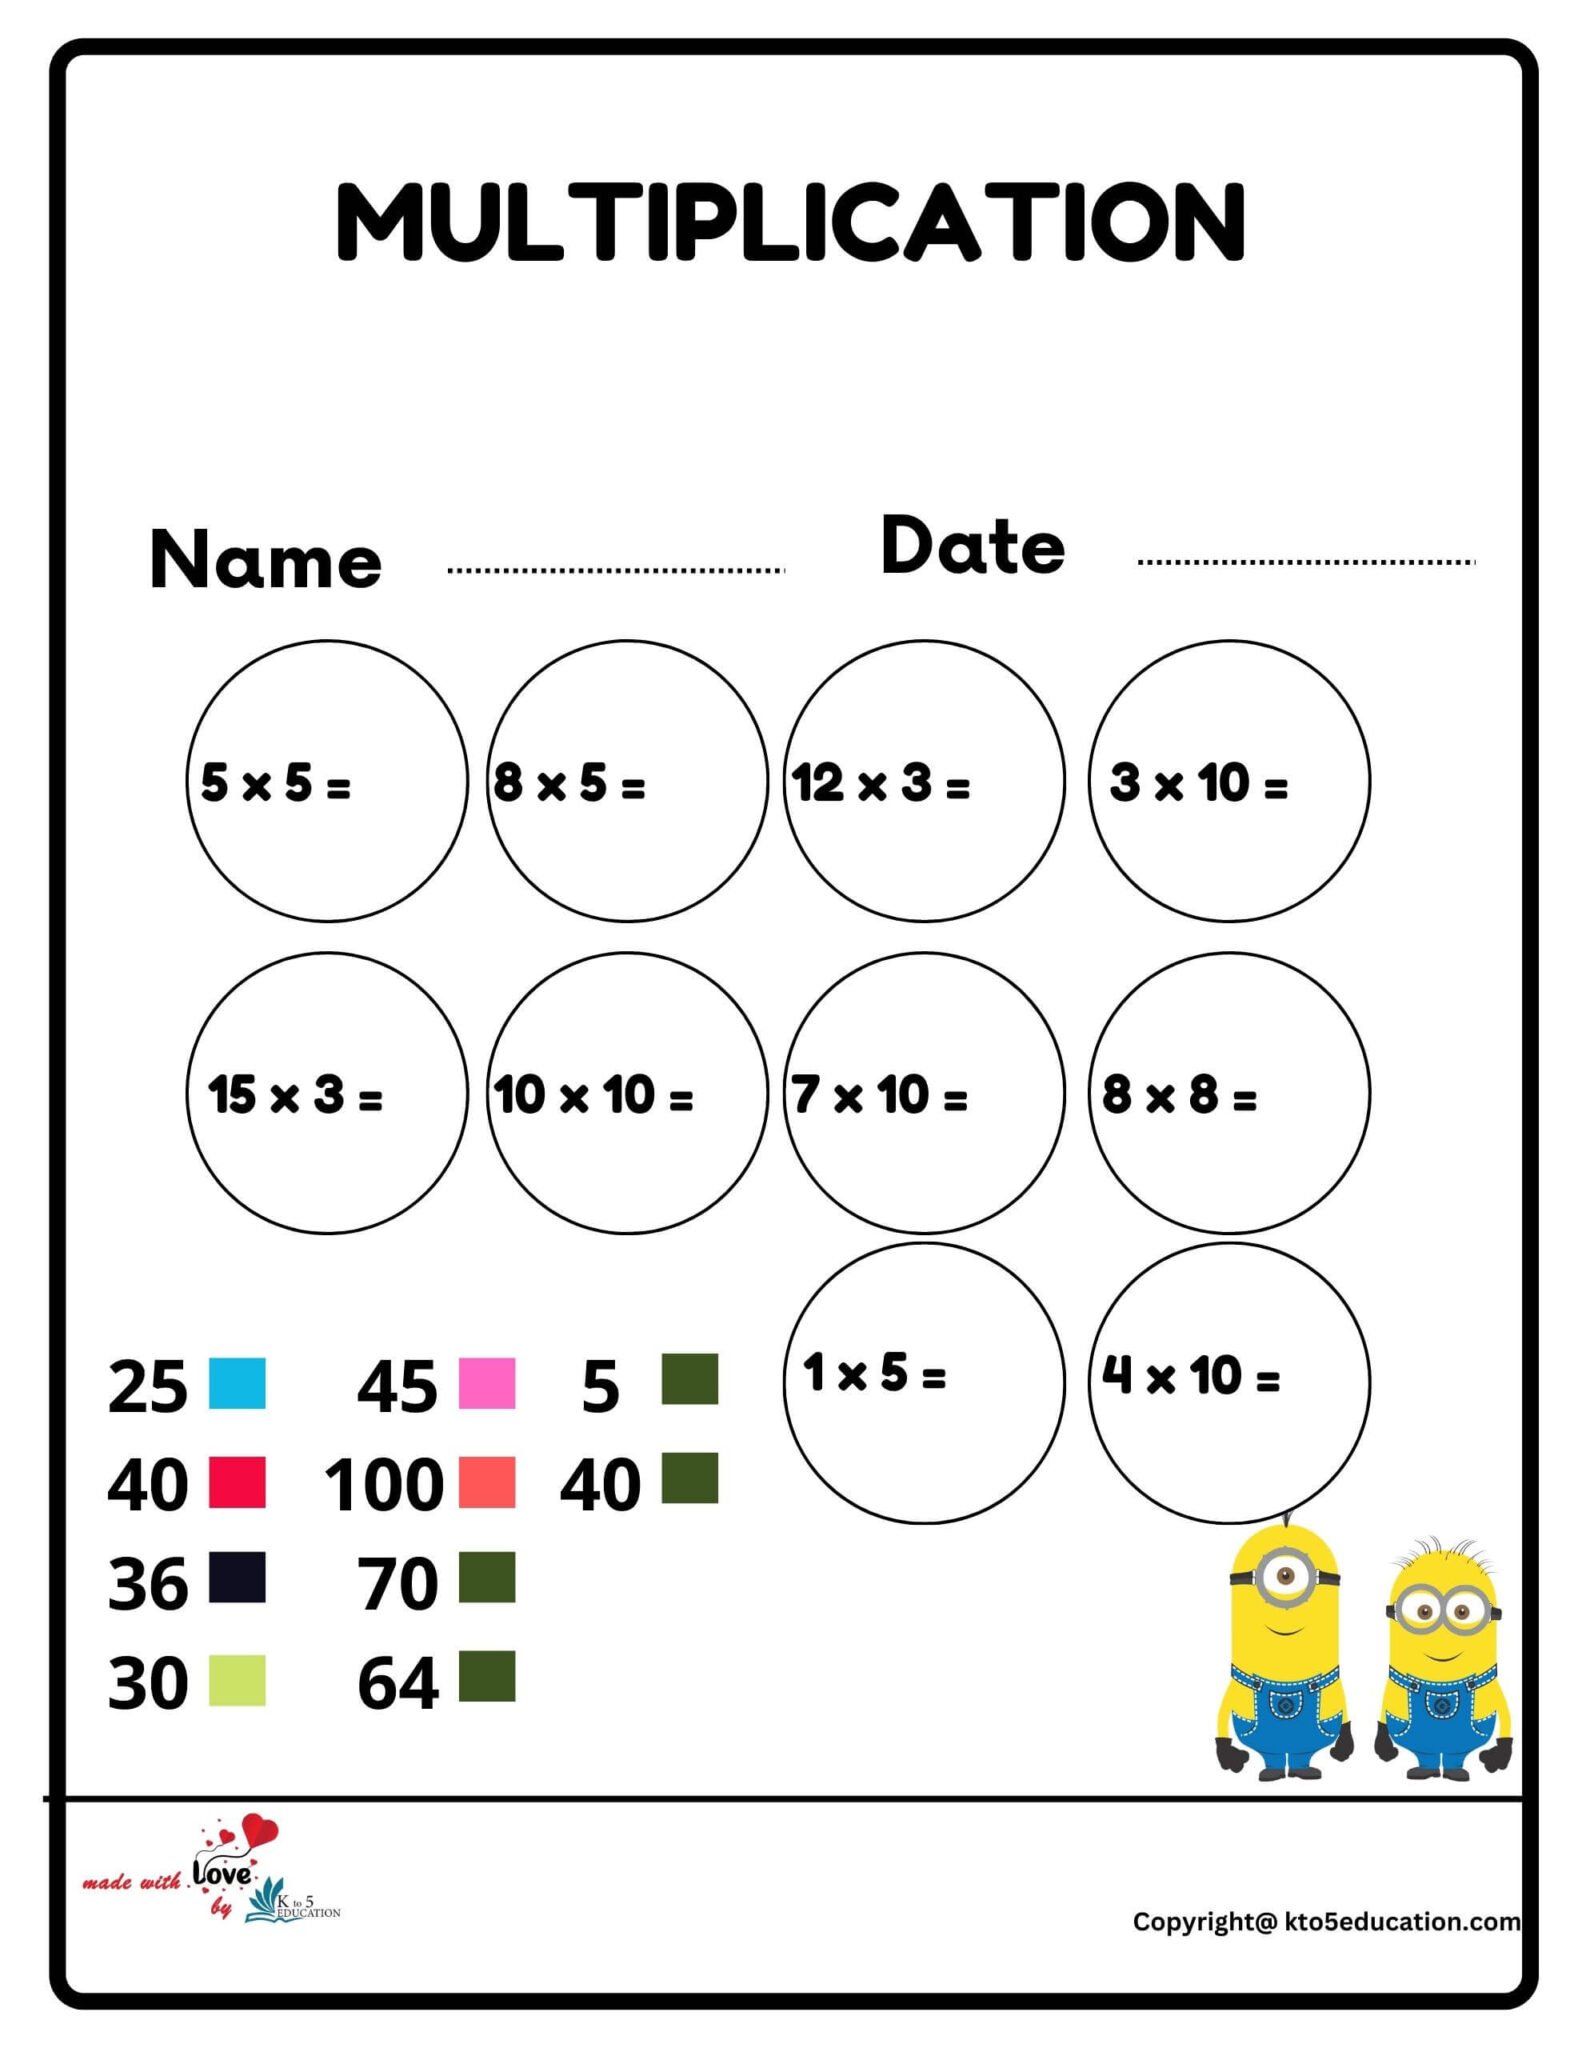 multiplication-worksheet-2-free-download